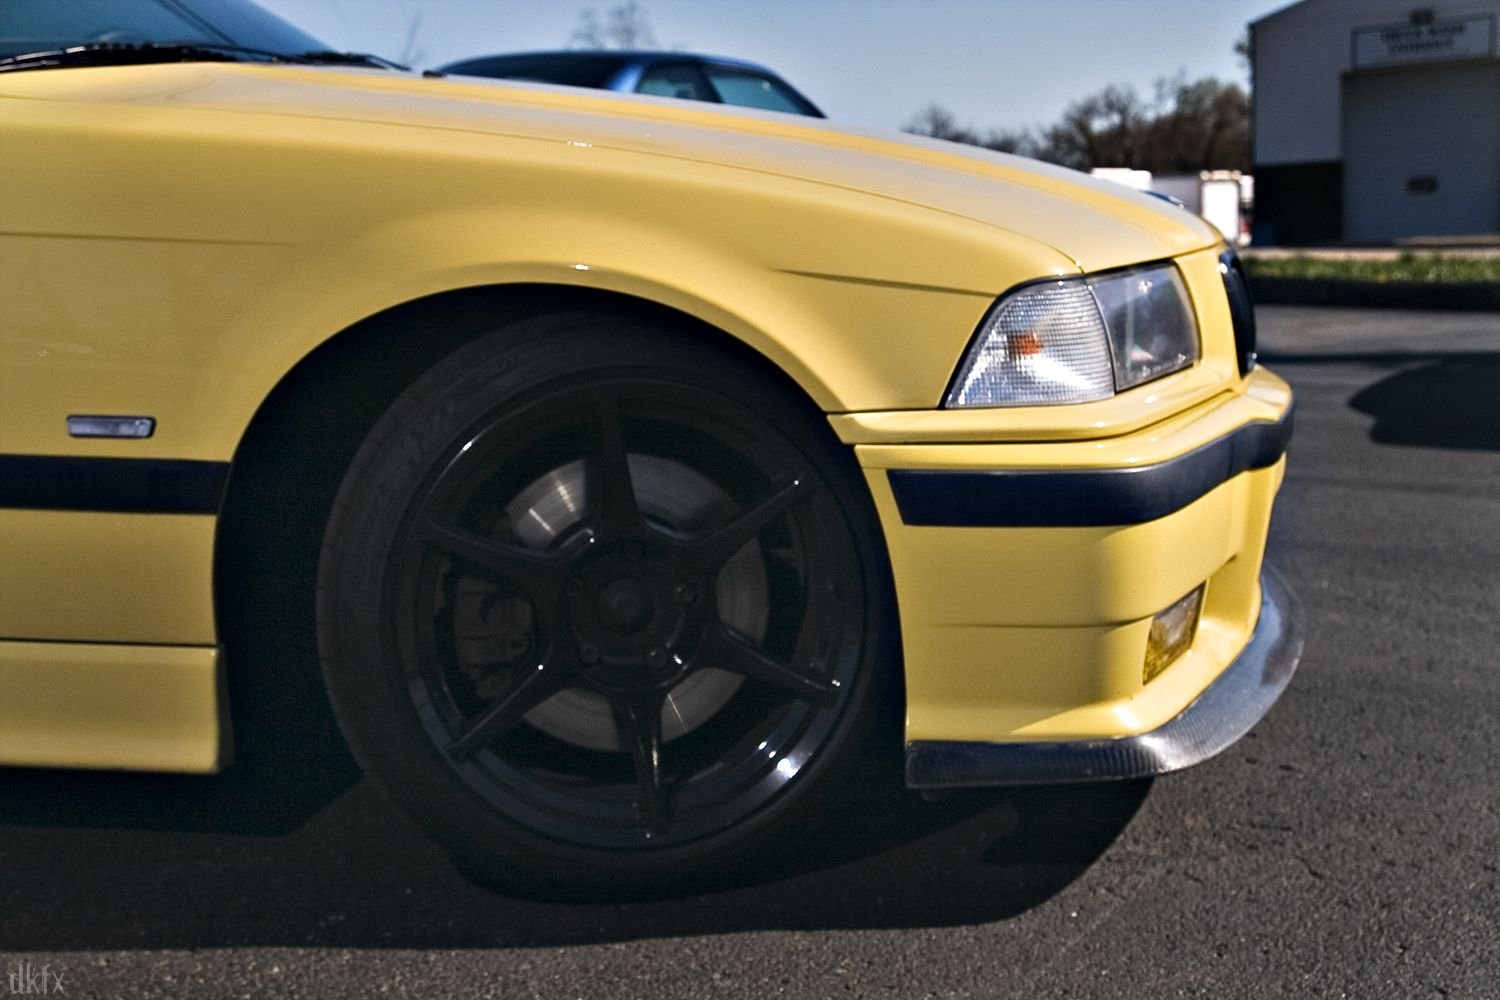 Custom Black Wheels on Yellow BMW 3-Series - Photo by dan kinzie